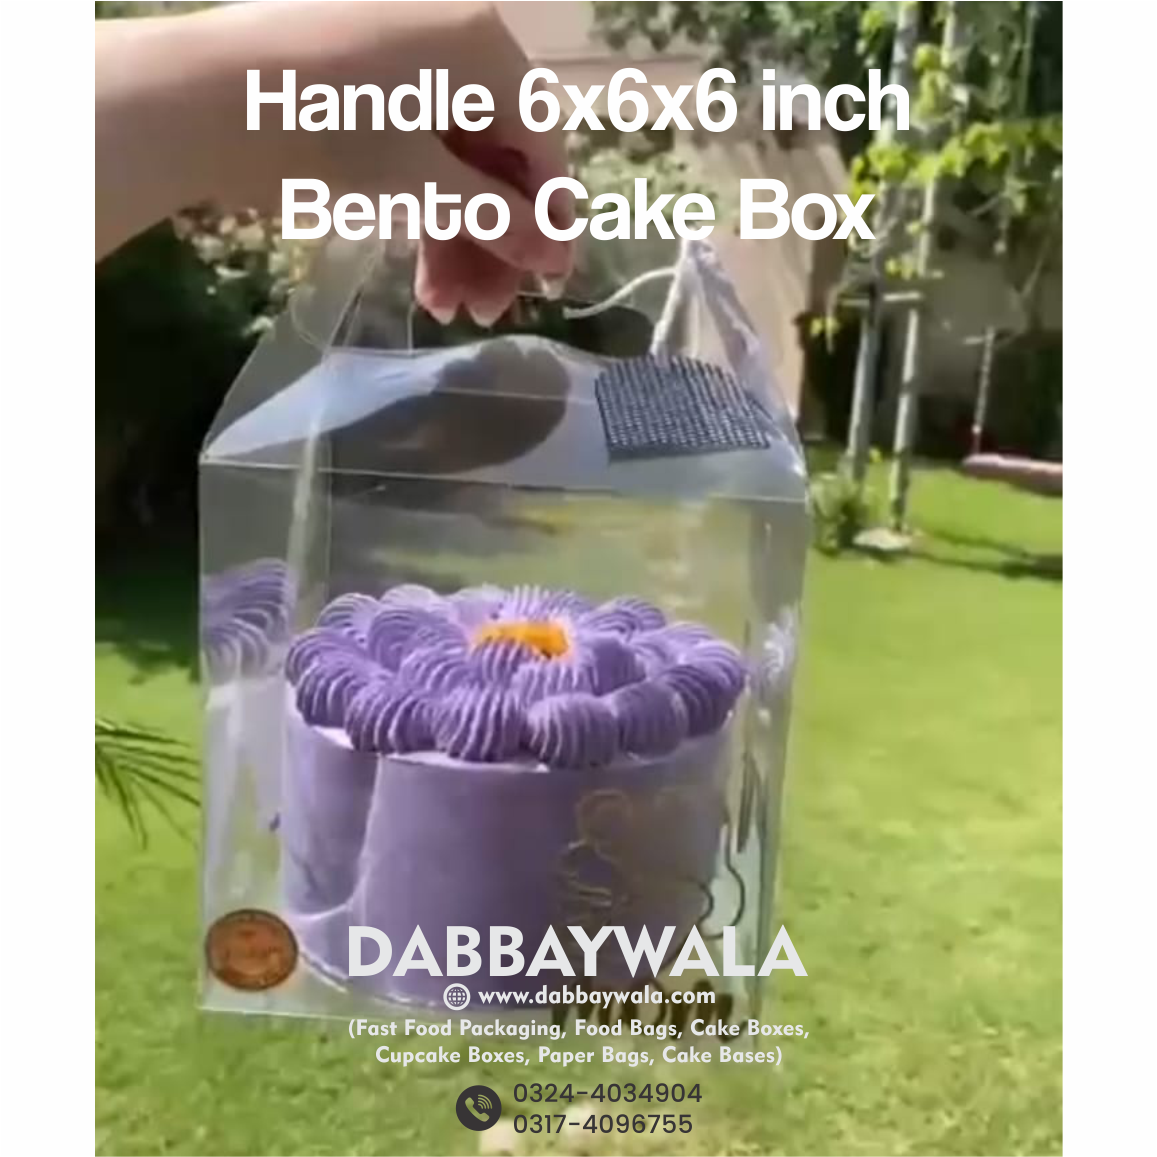 Handle 6x6x6 inch Bento Cake Box